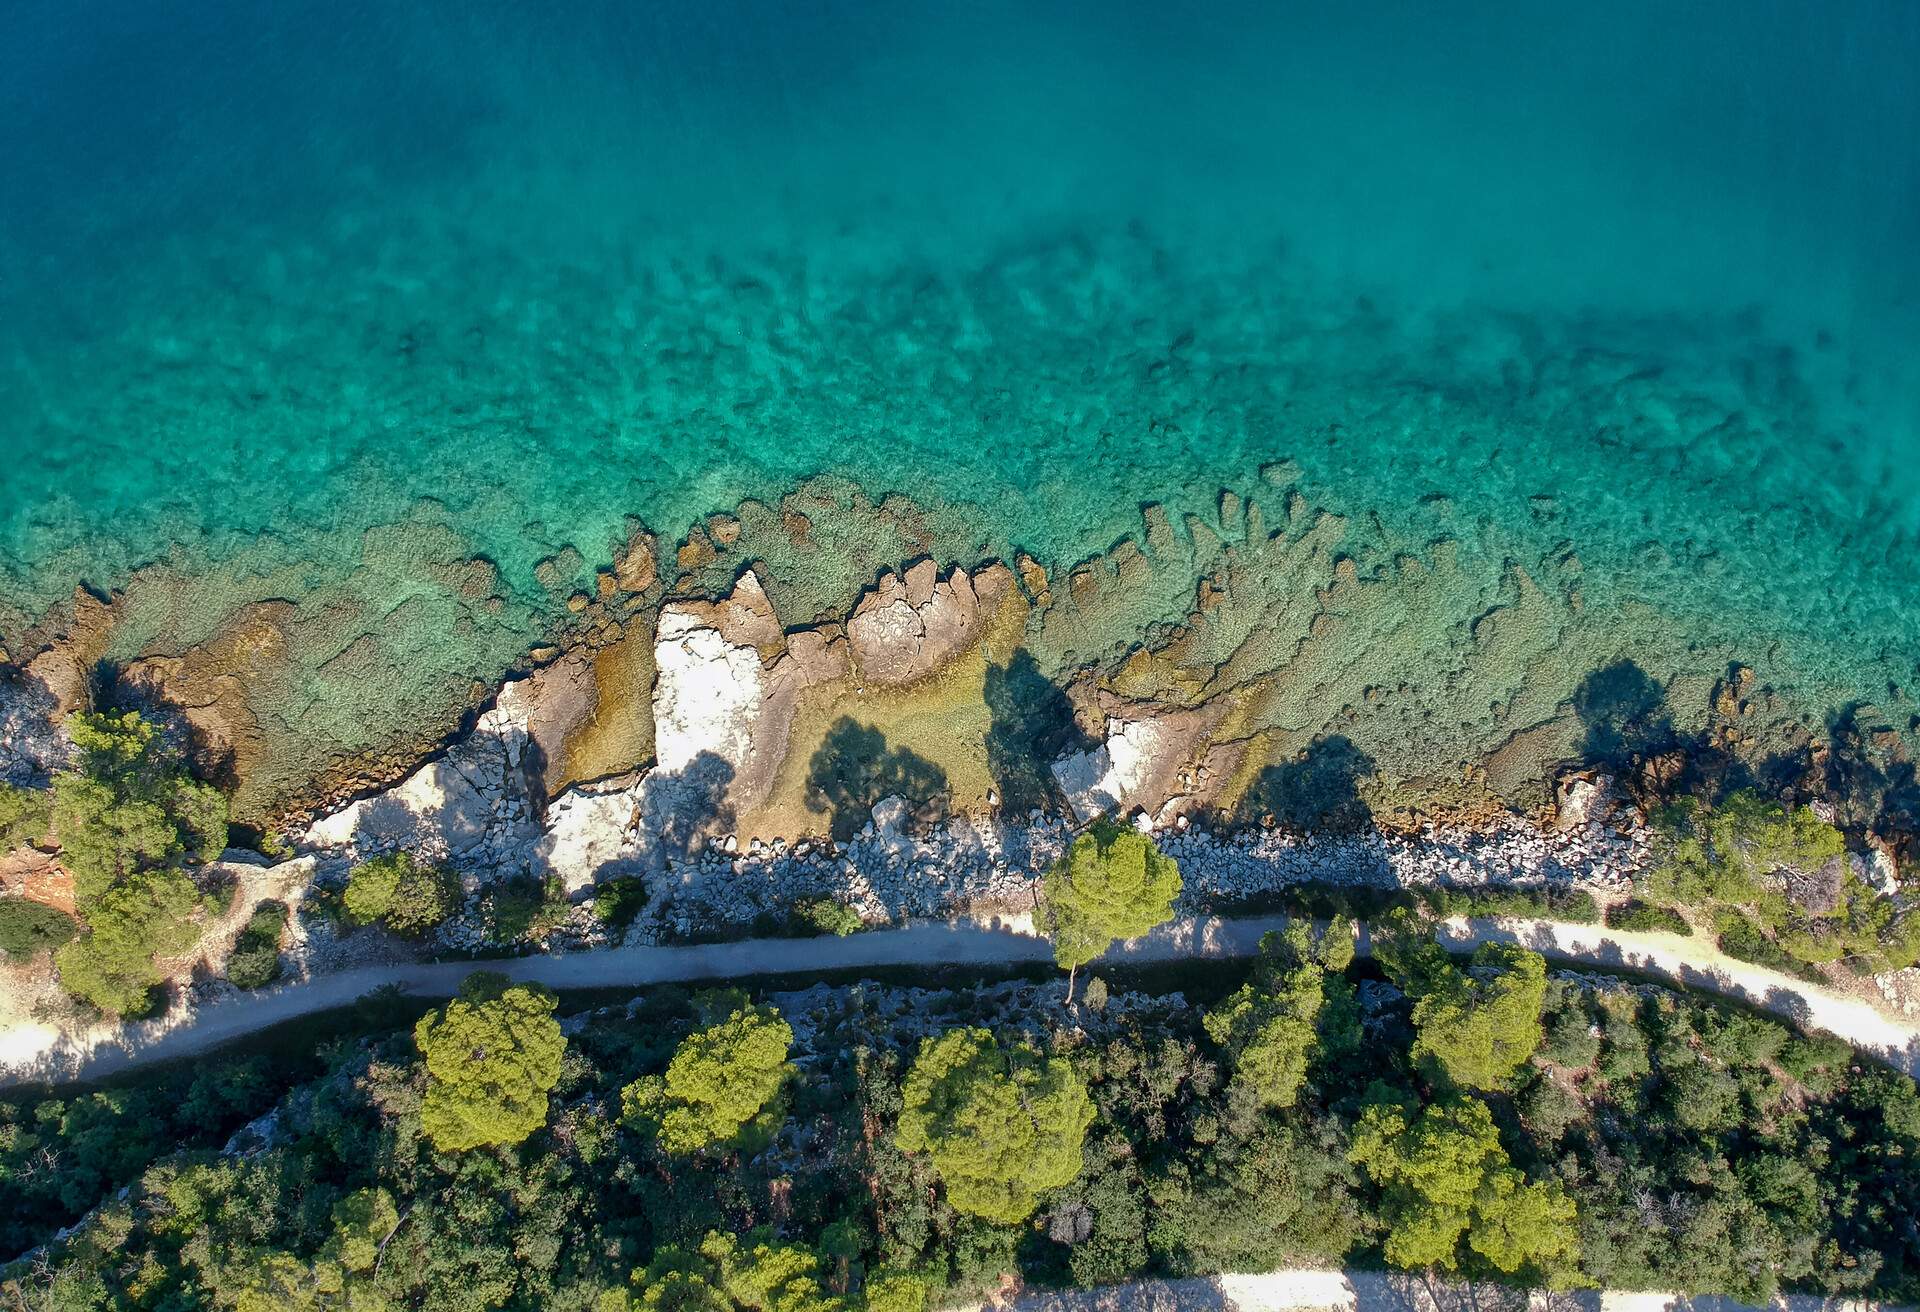 Top down view on the coastline near small town of Rovinj on Istrian peninsula, Croatia.